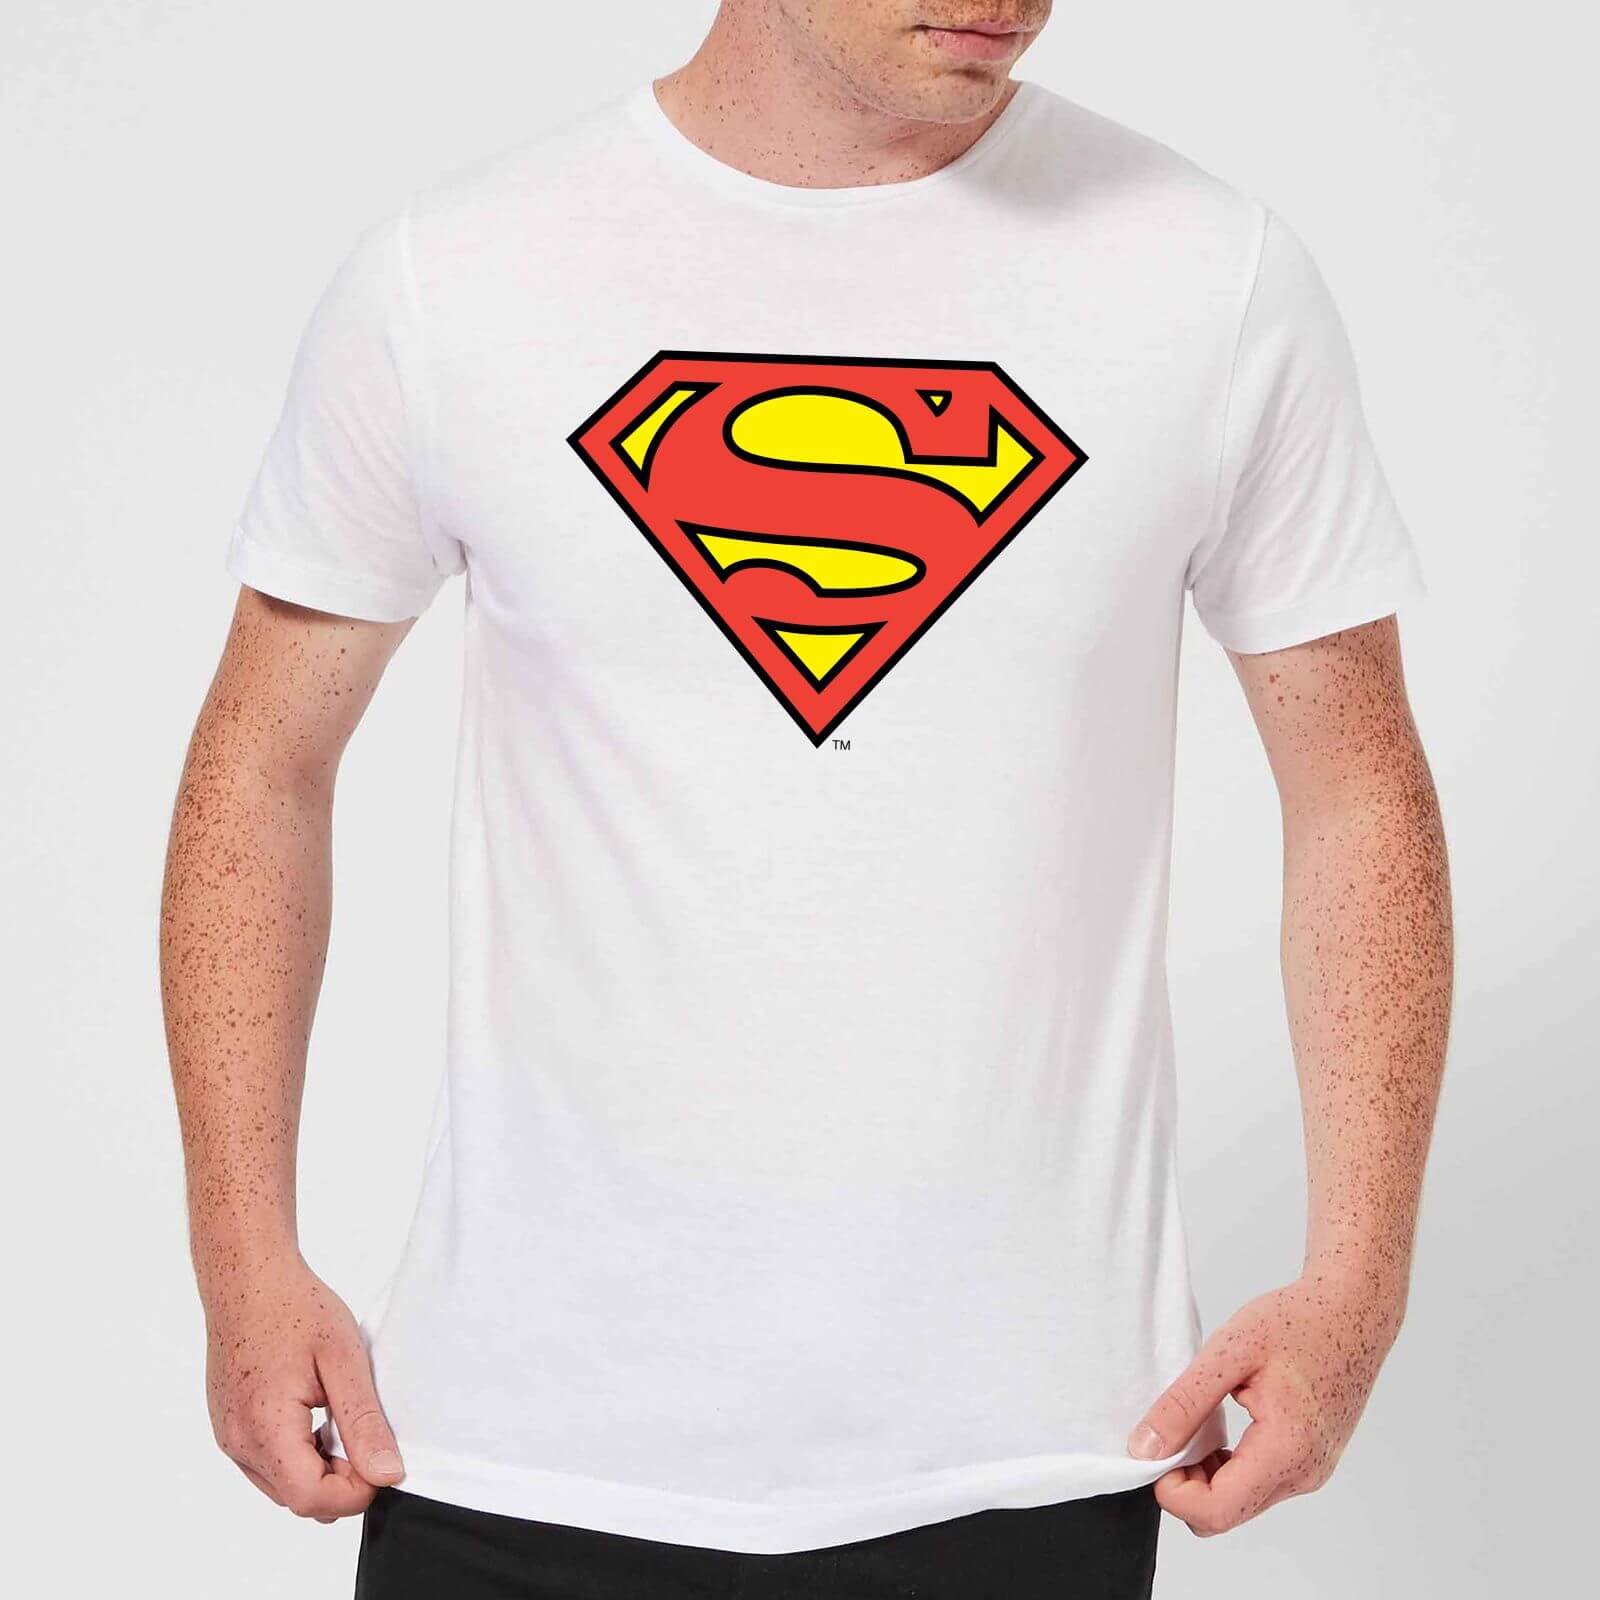 Dc Comics Dc originals official superman shield men's t-shirt - white - xl